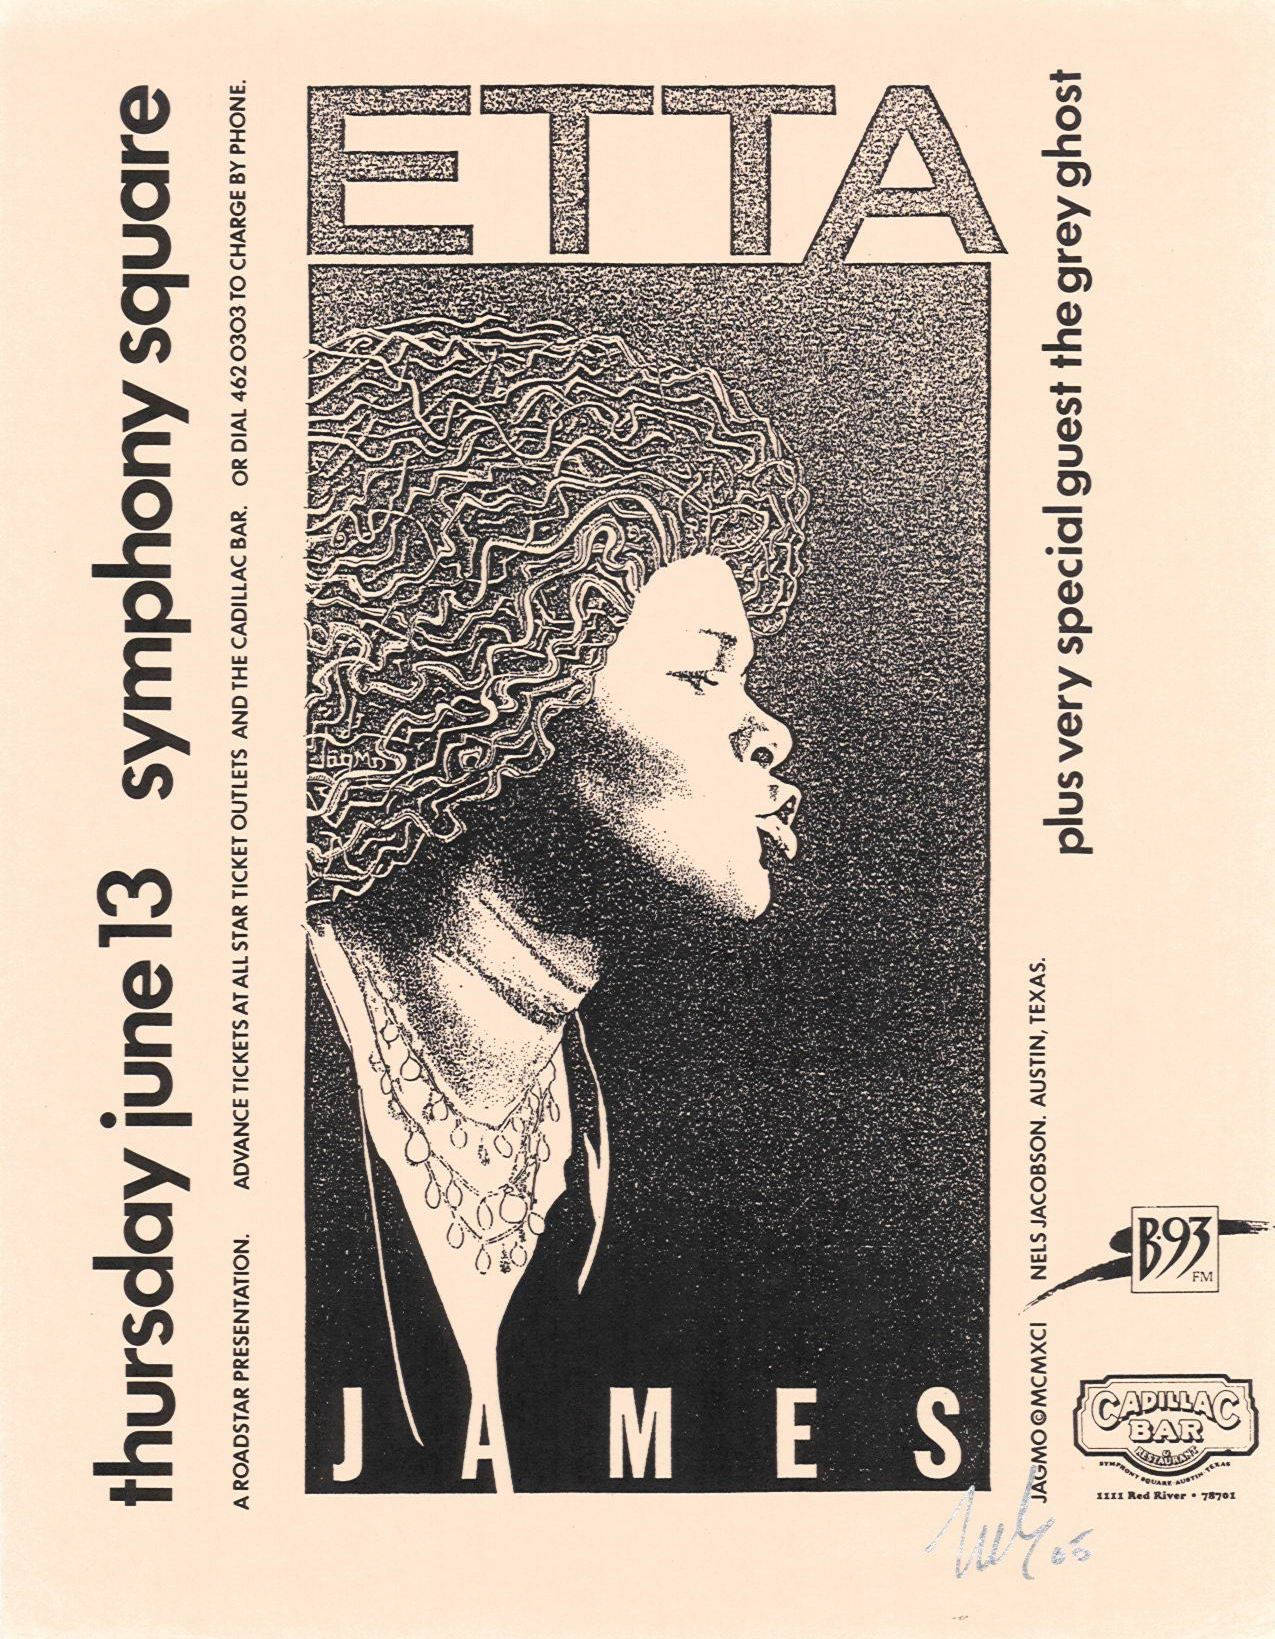 Etta James Concert Poster Wallpaper